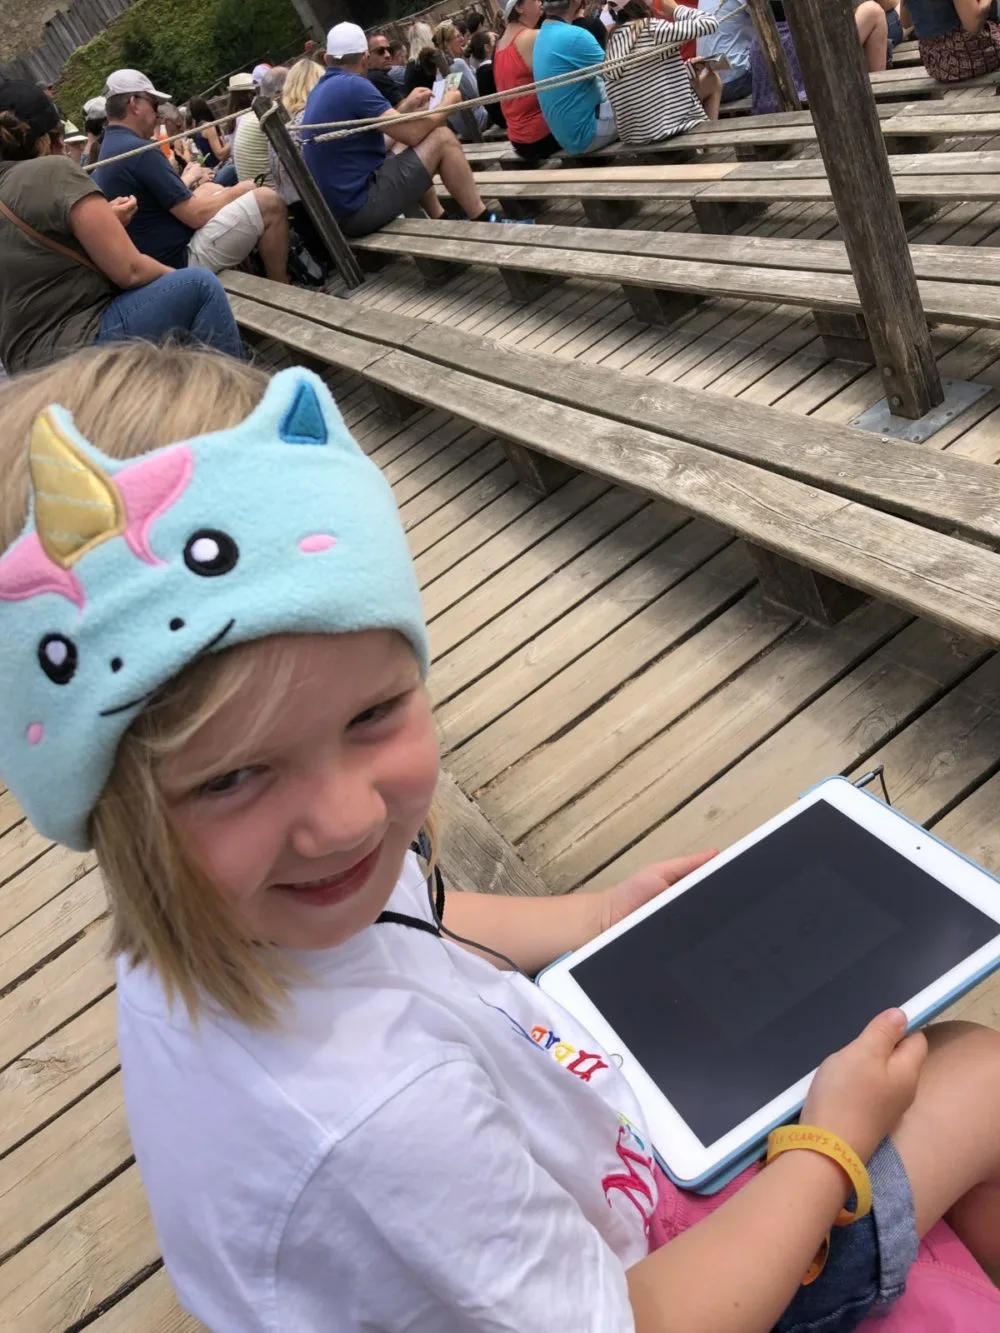 Tips for visiting Puy du Fou with kids - download the Puy du Fou app 